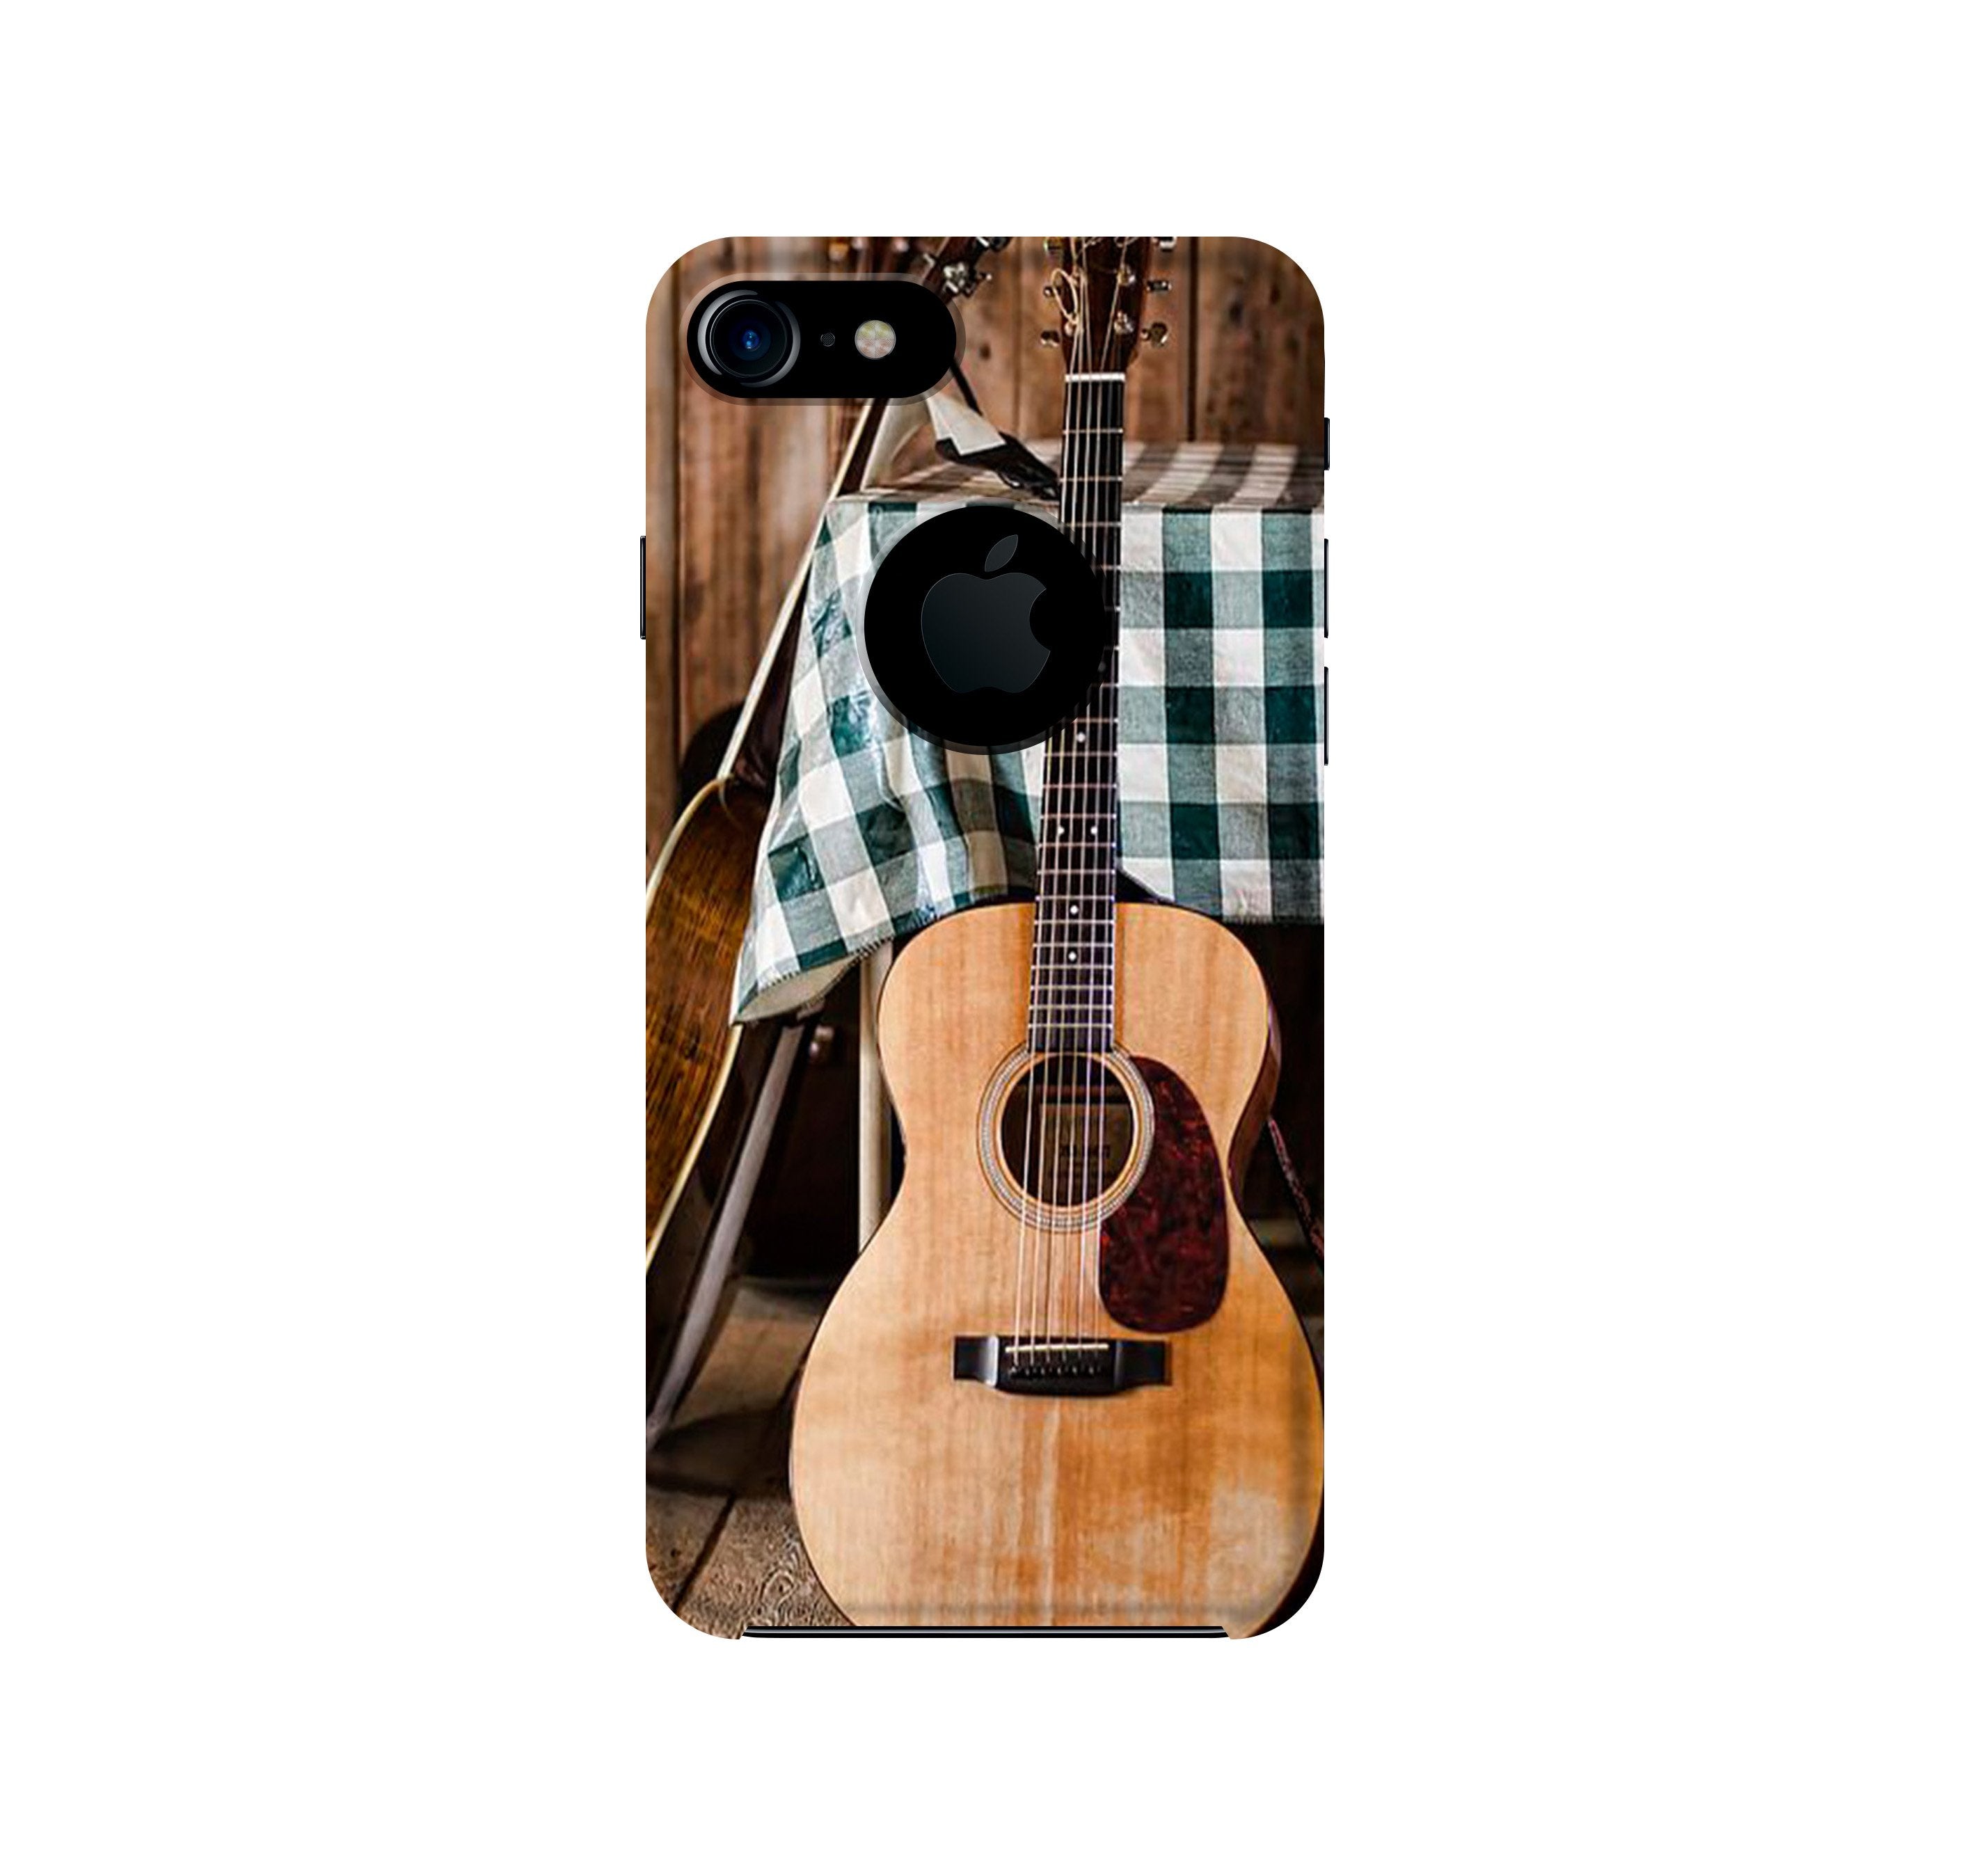 Guitar2 Case for iPhone 7 logo cut